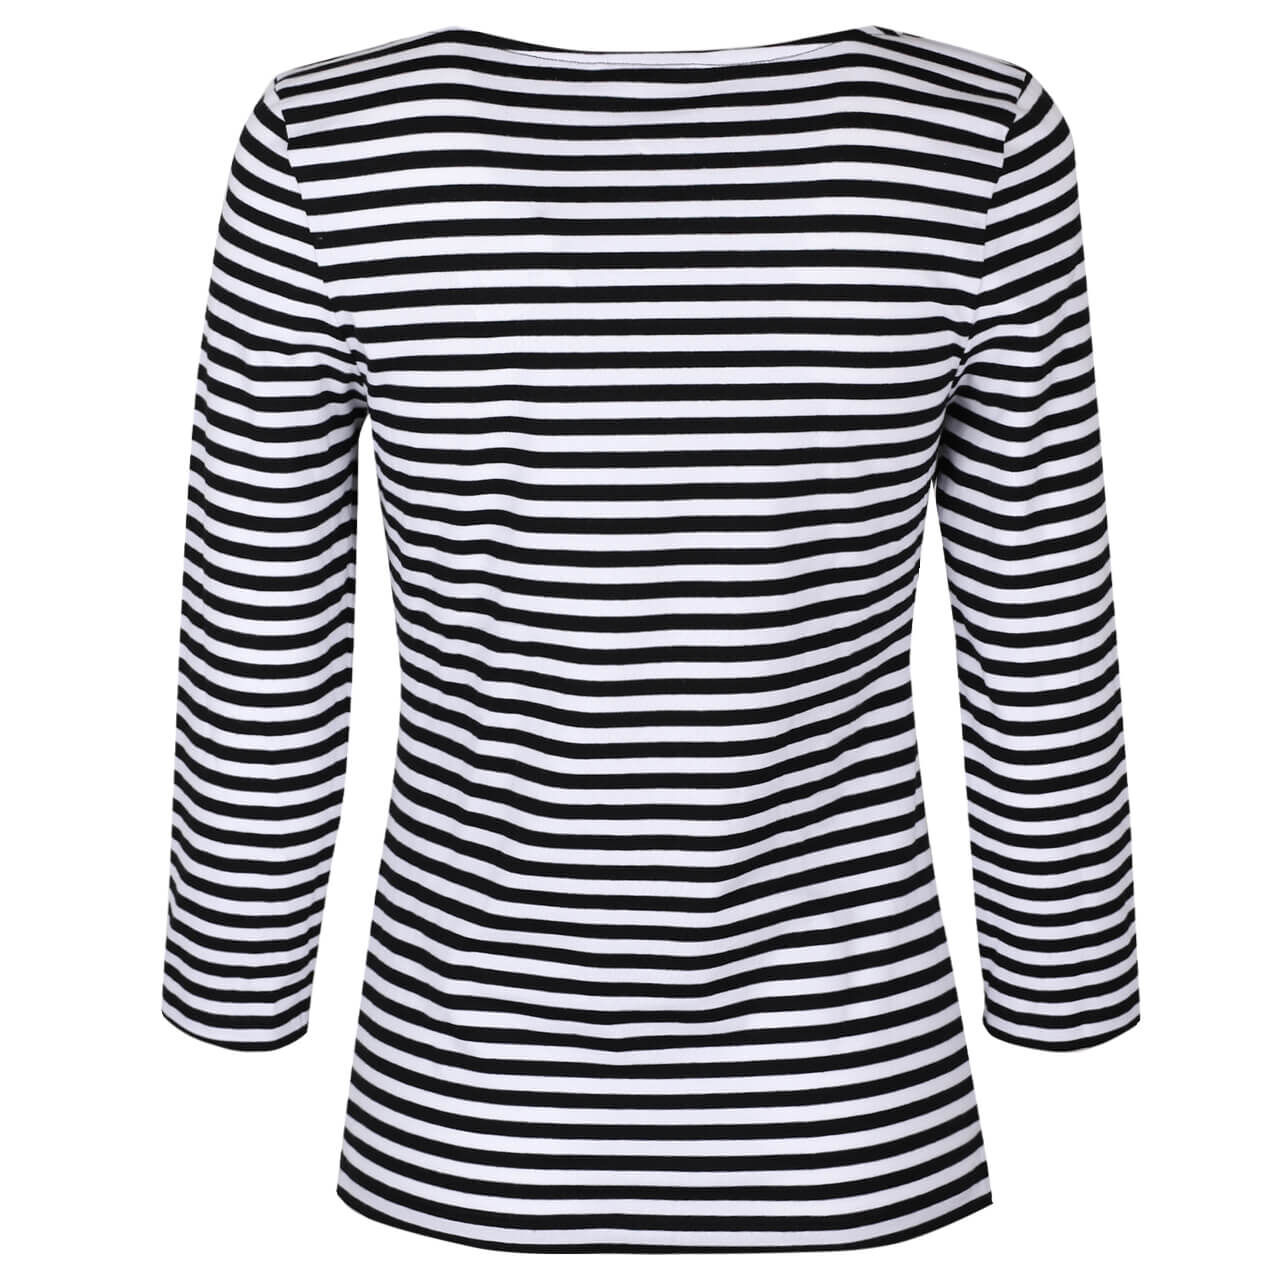 Comma Damen 3/4 Arm Shirt black white stripes